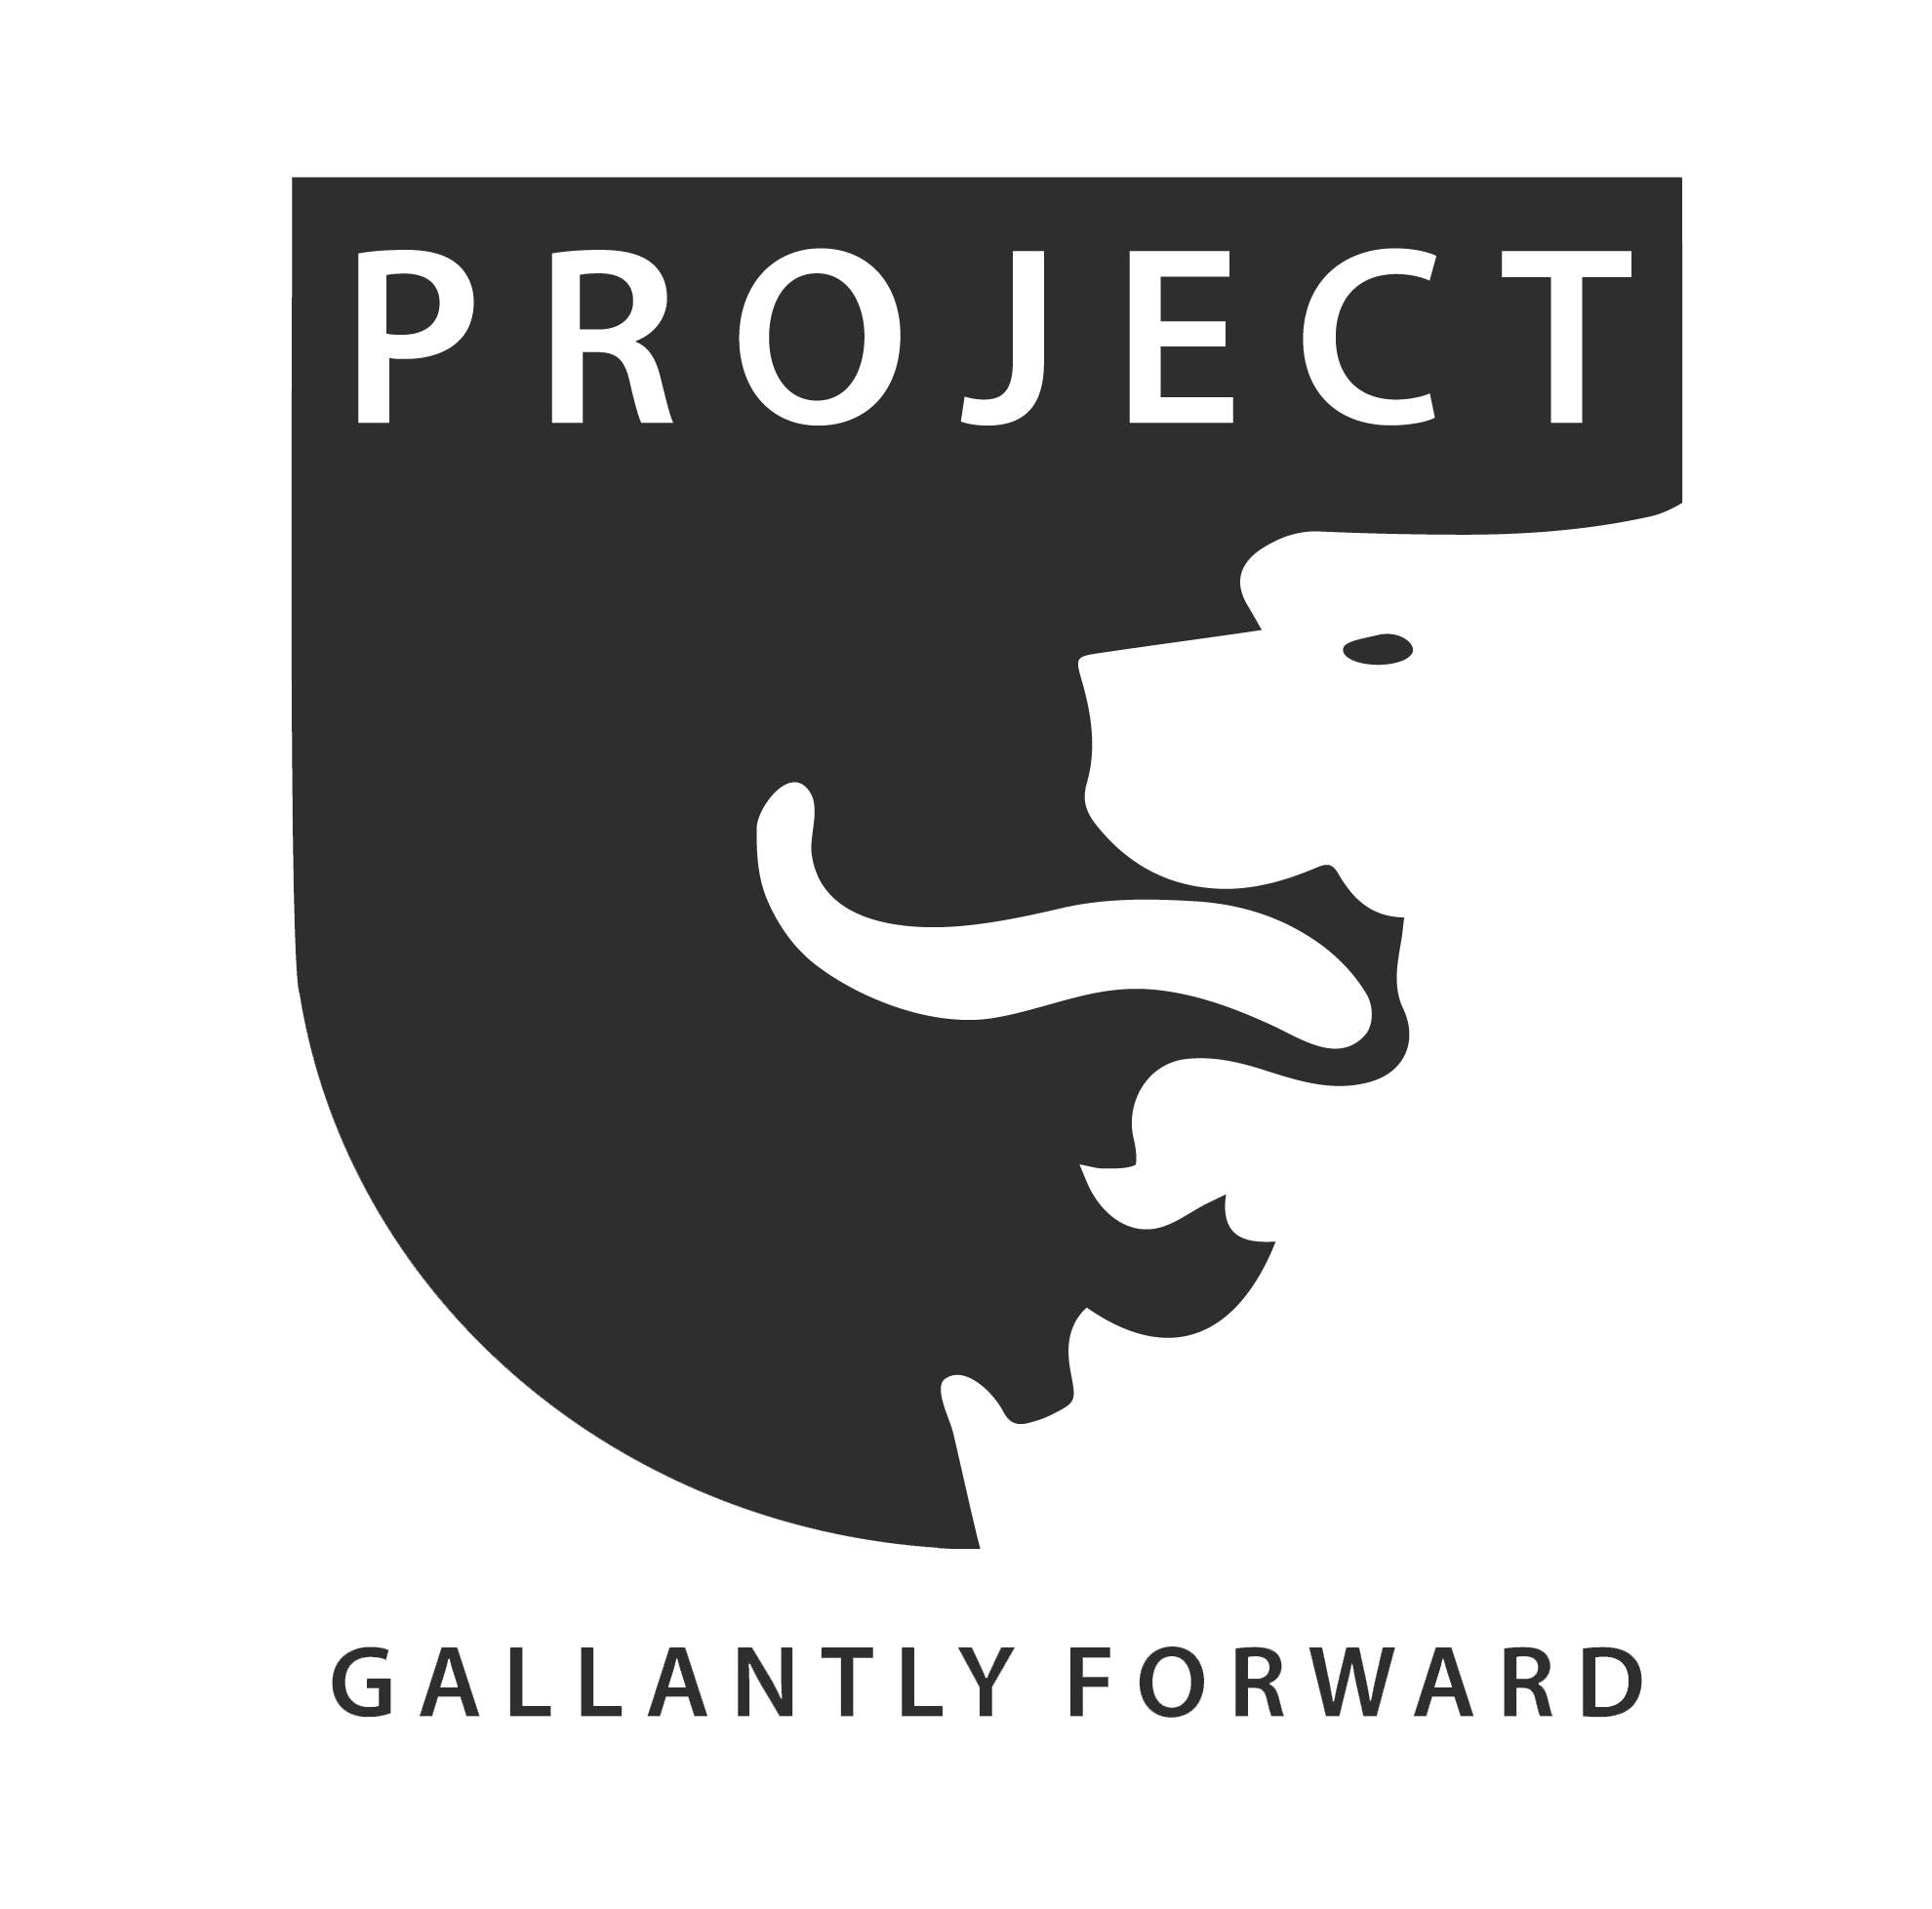 Project Gallantly Forward